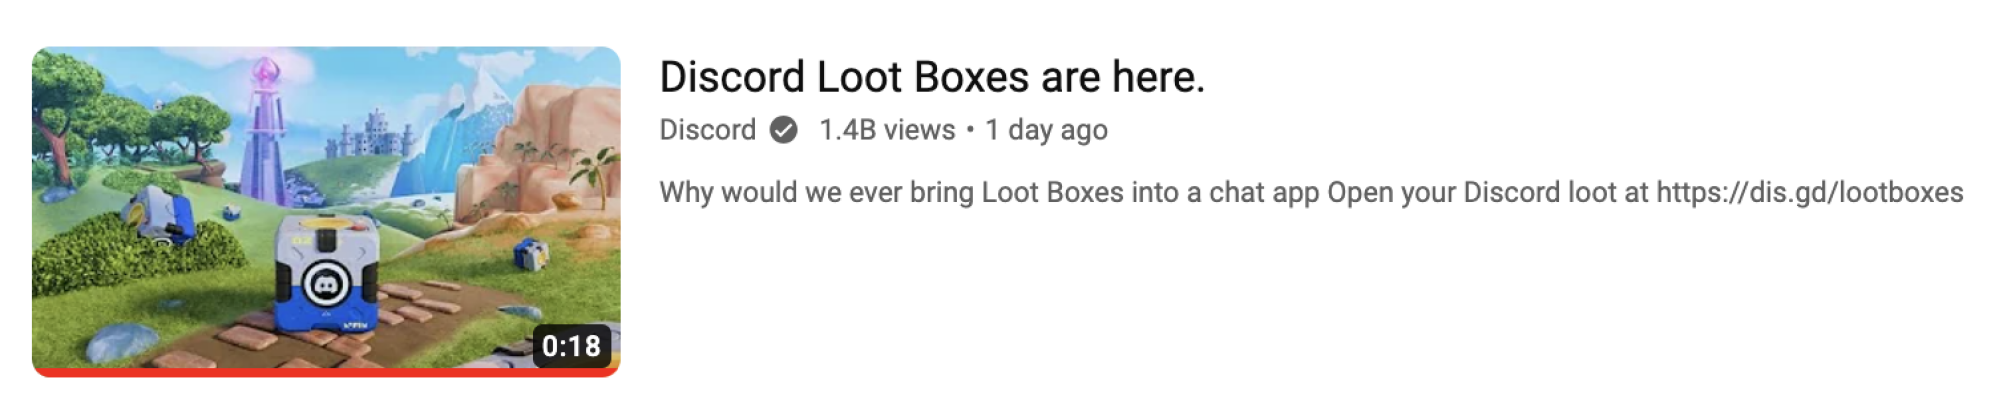 Discord Loot Boxes YouTube video screenshot